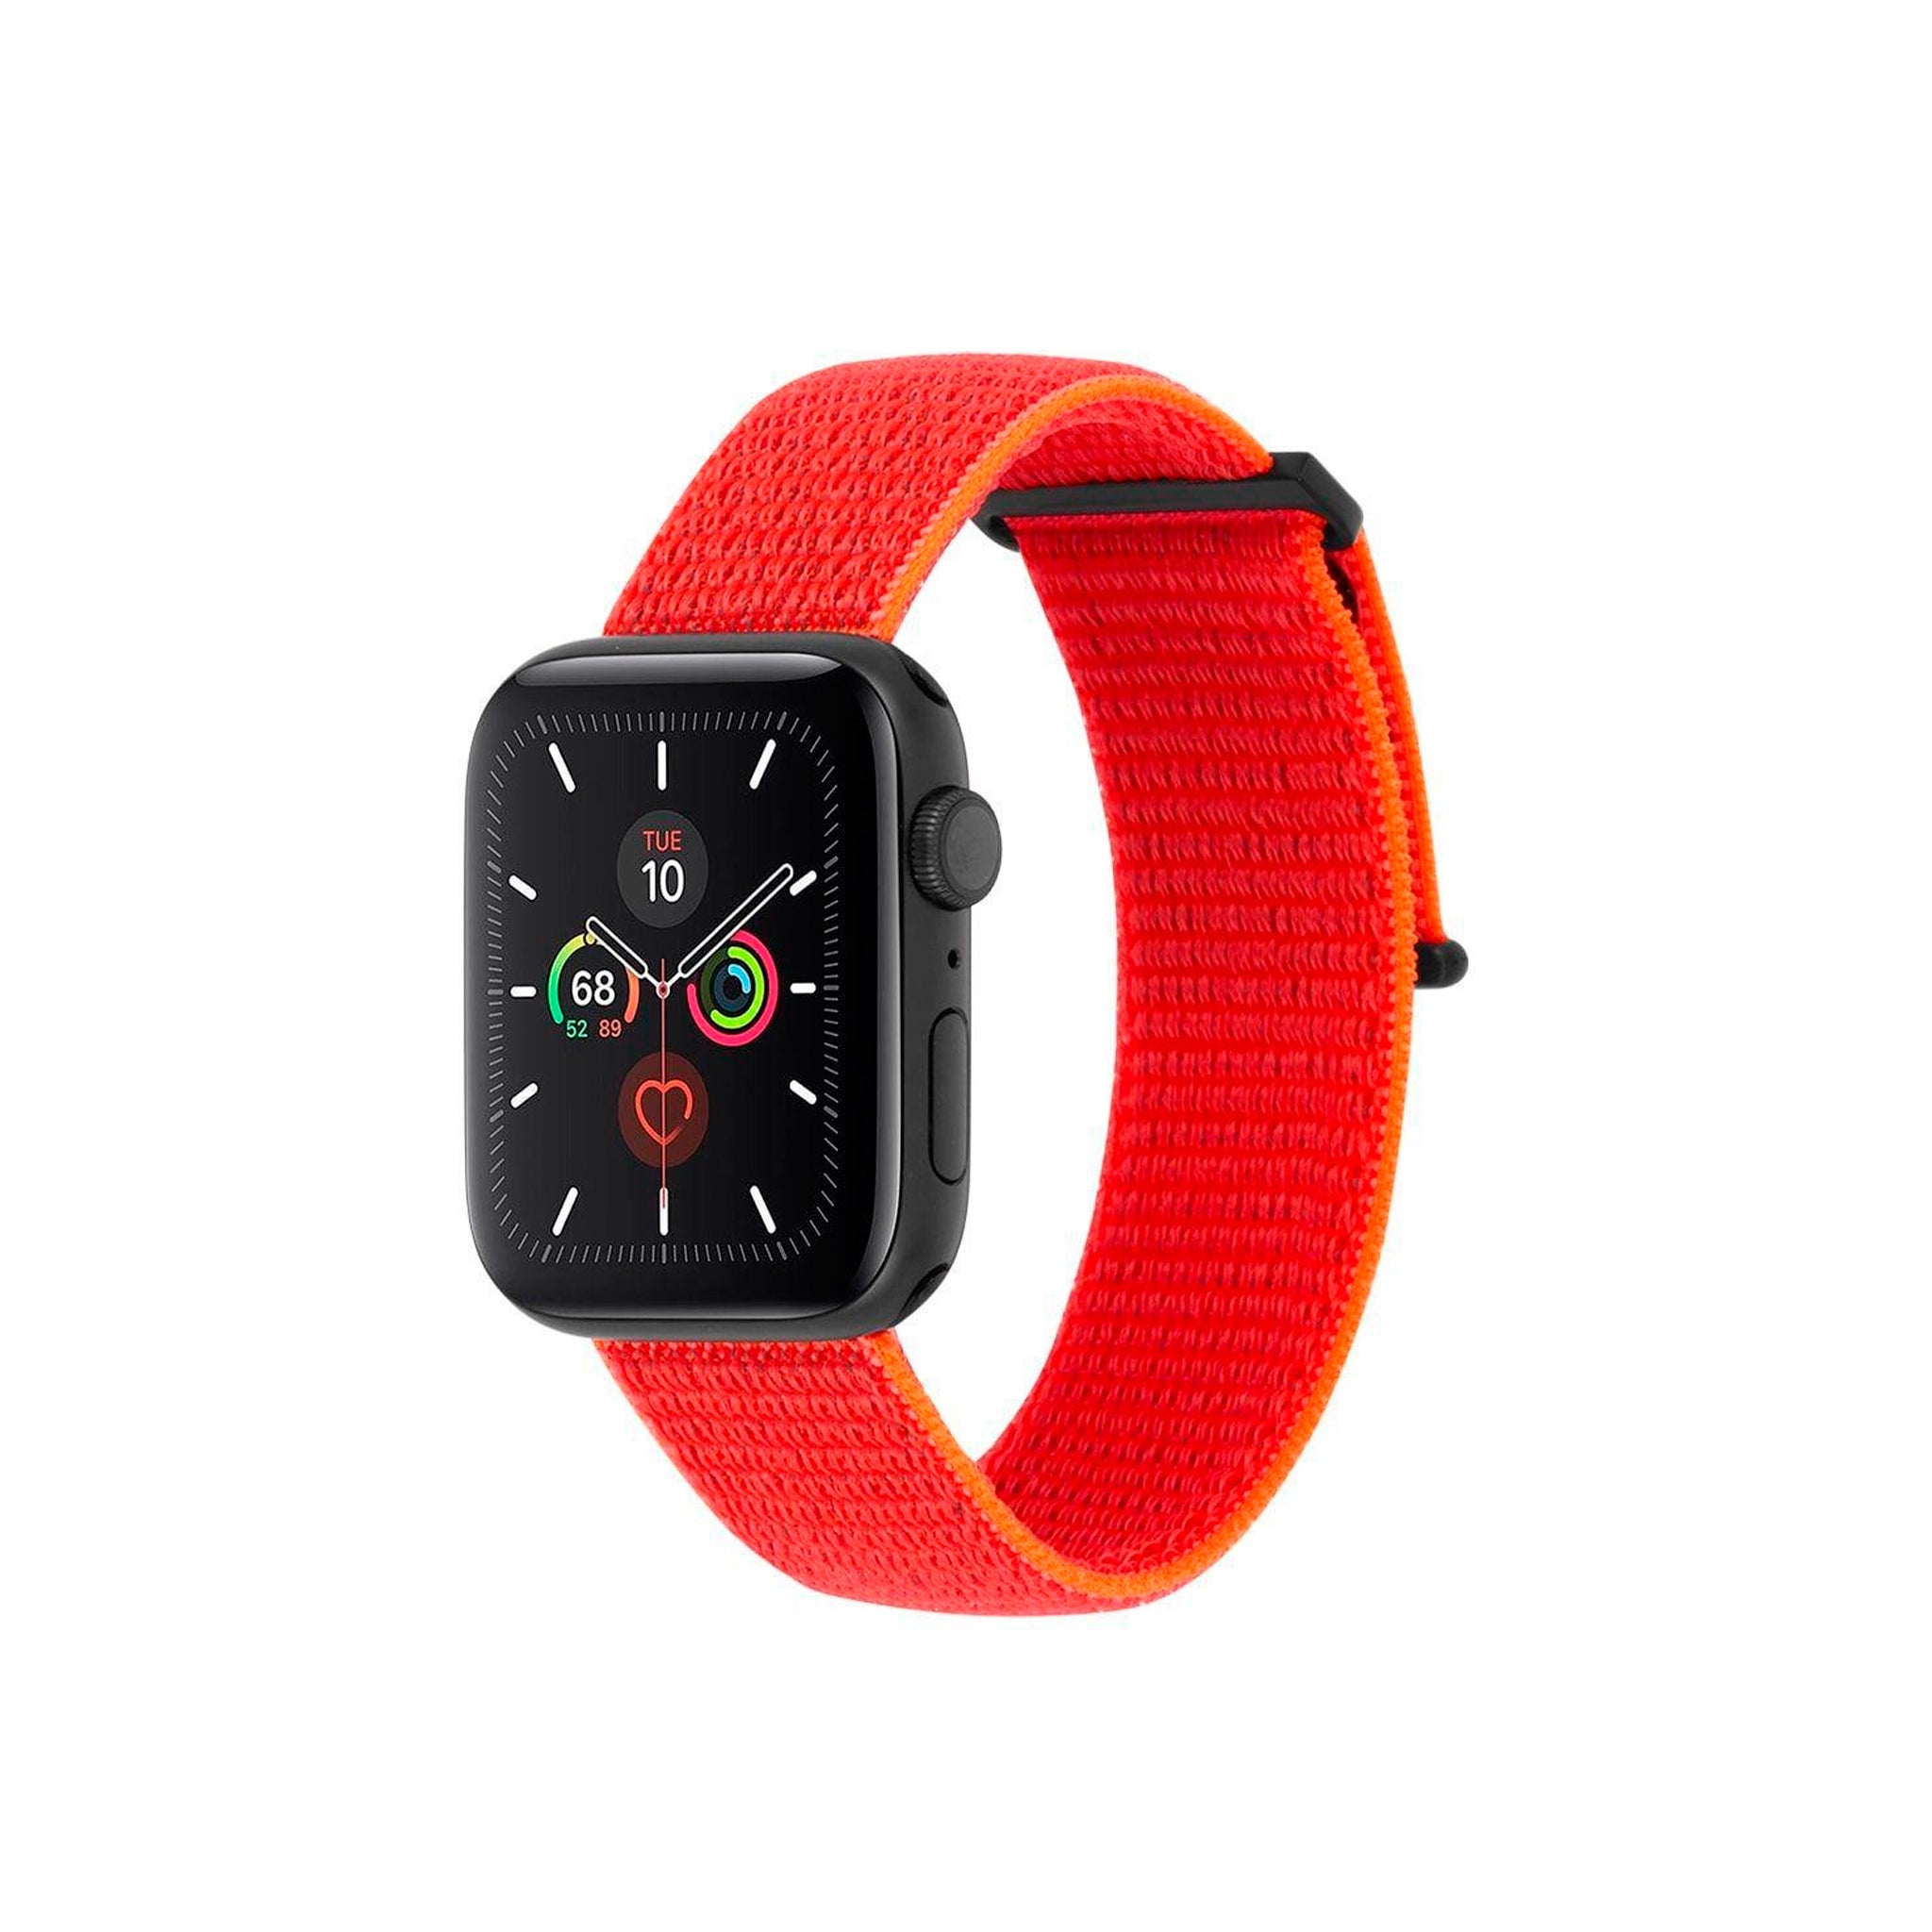 Case-mate - Nylon Watchband For Apple Watch 42mm / 44mm - Reflective Neon Orange